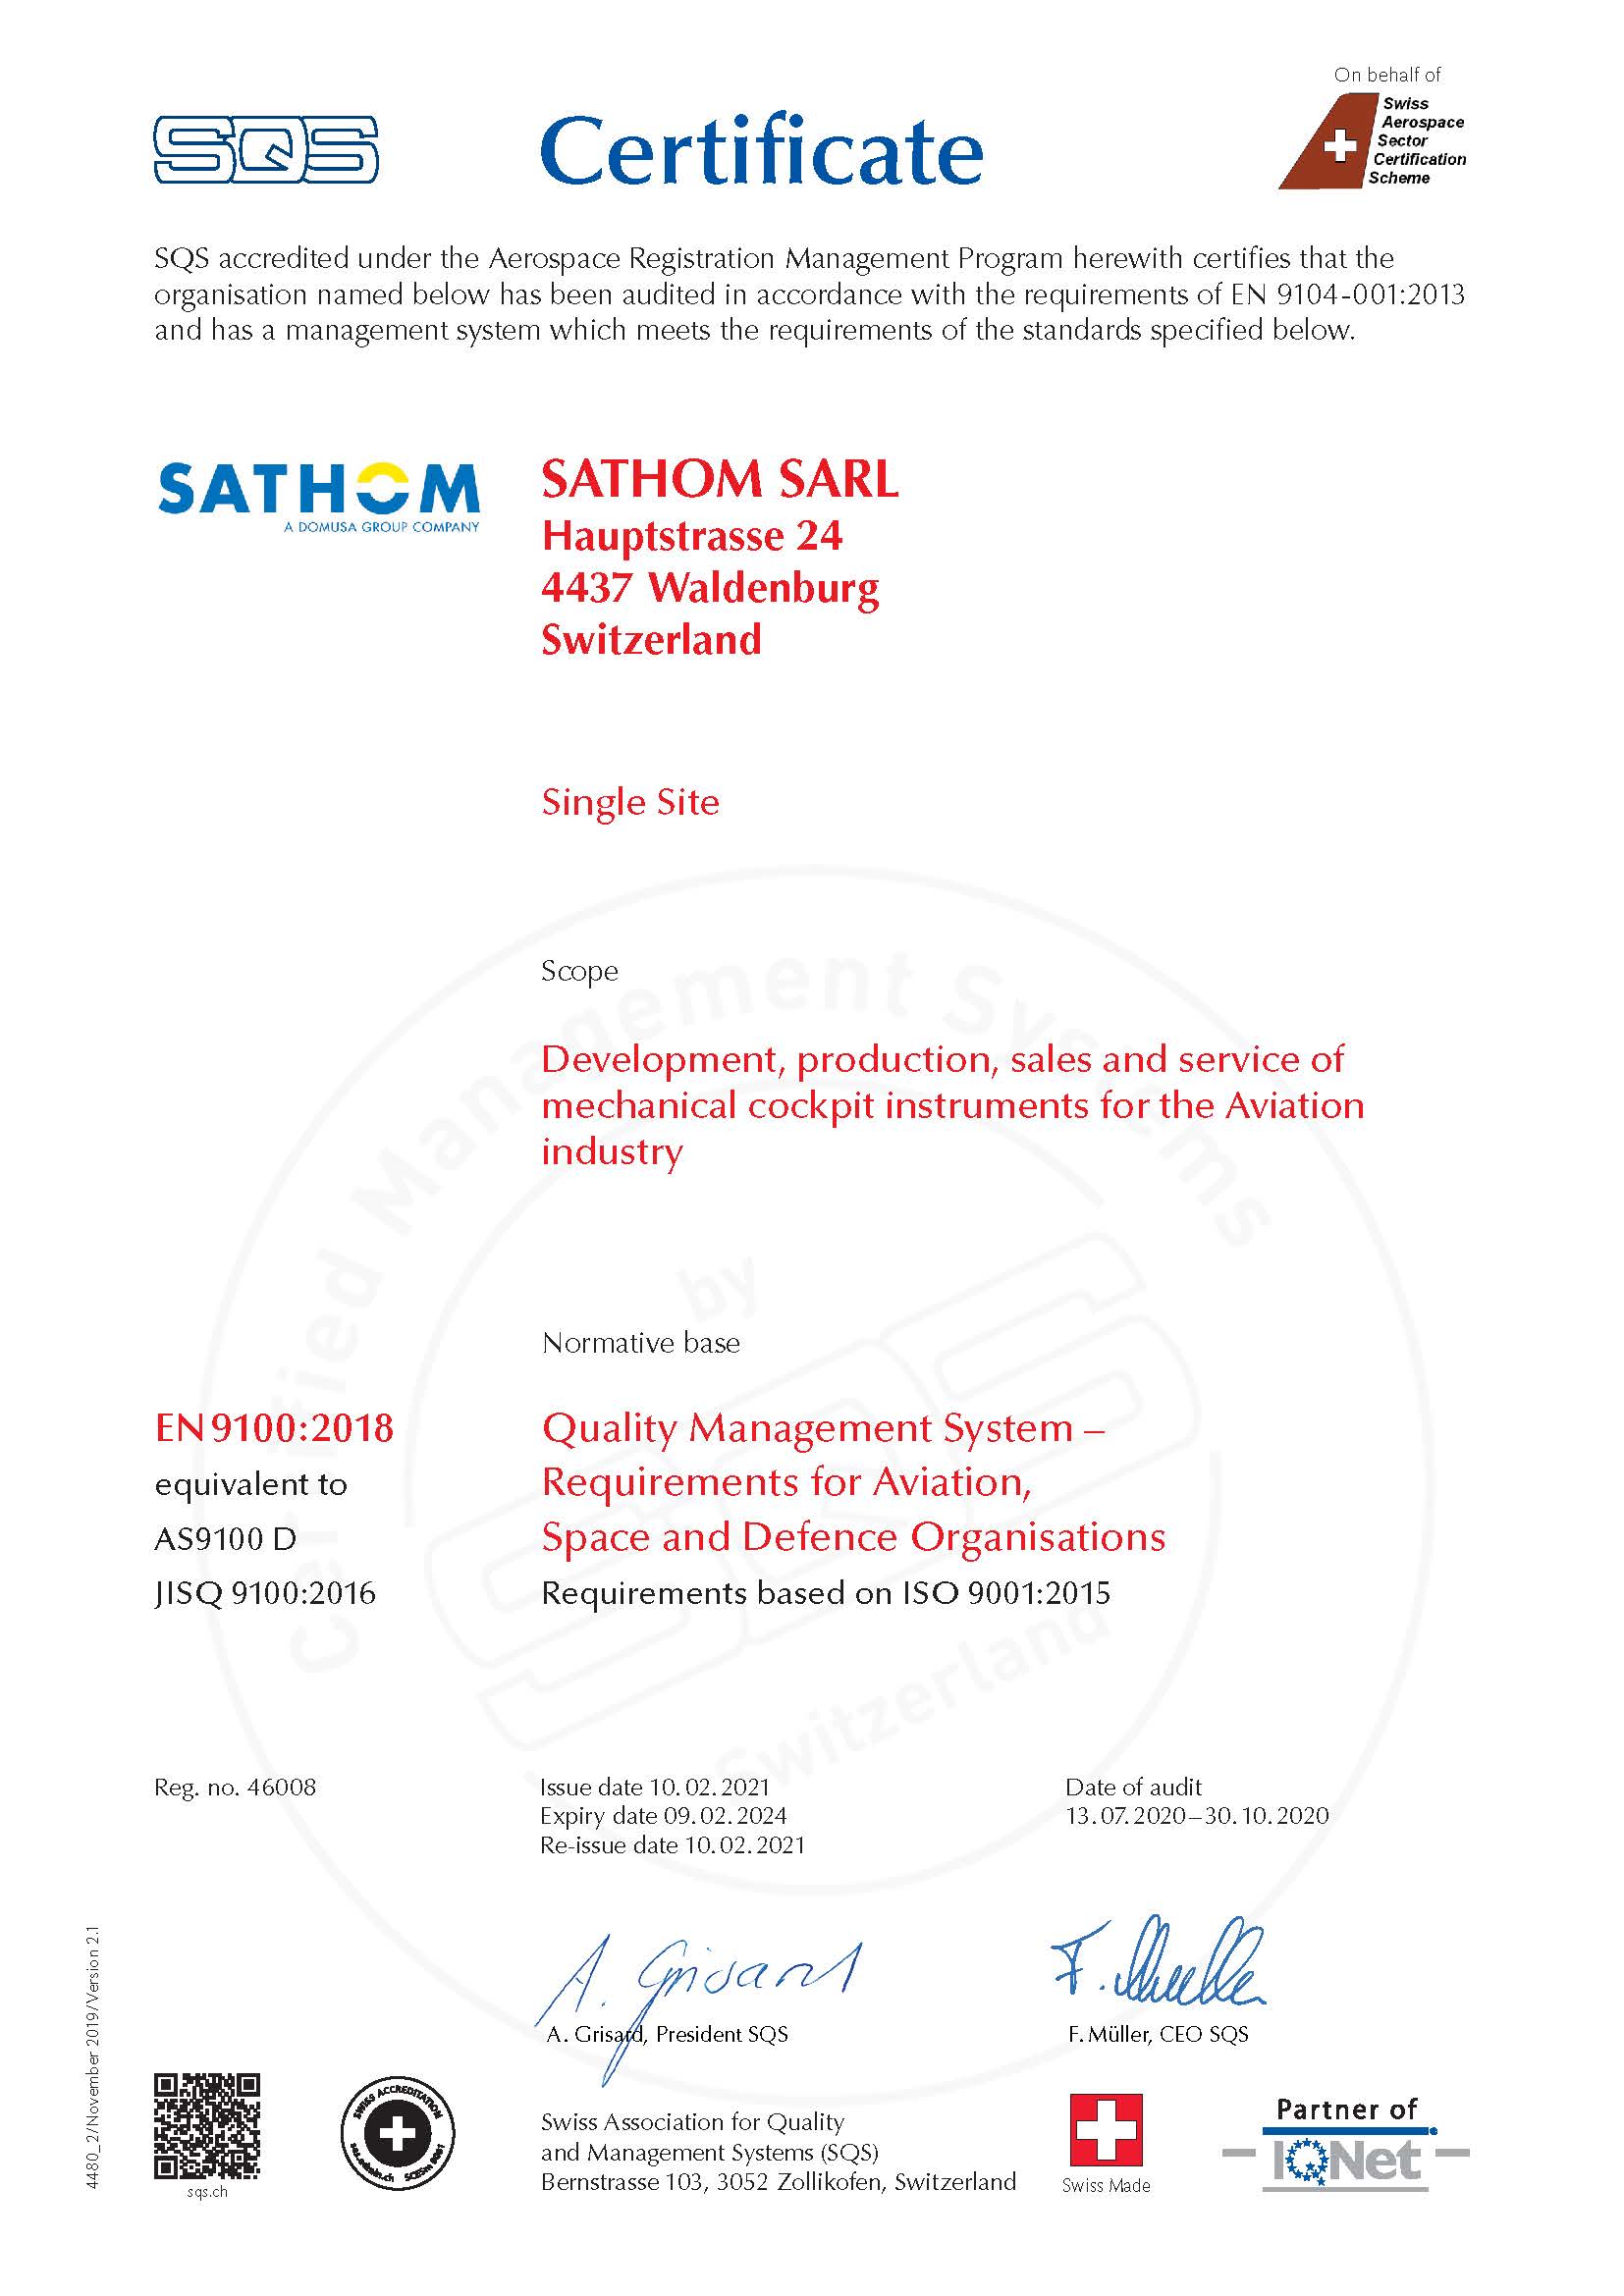 Maintenance Organisation Approval Certificate